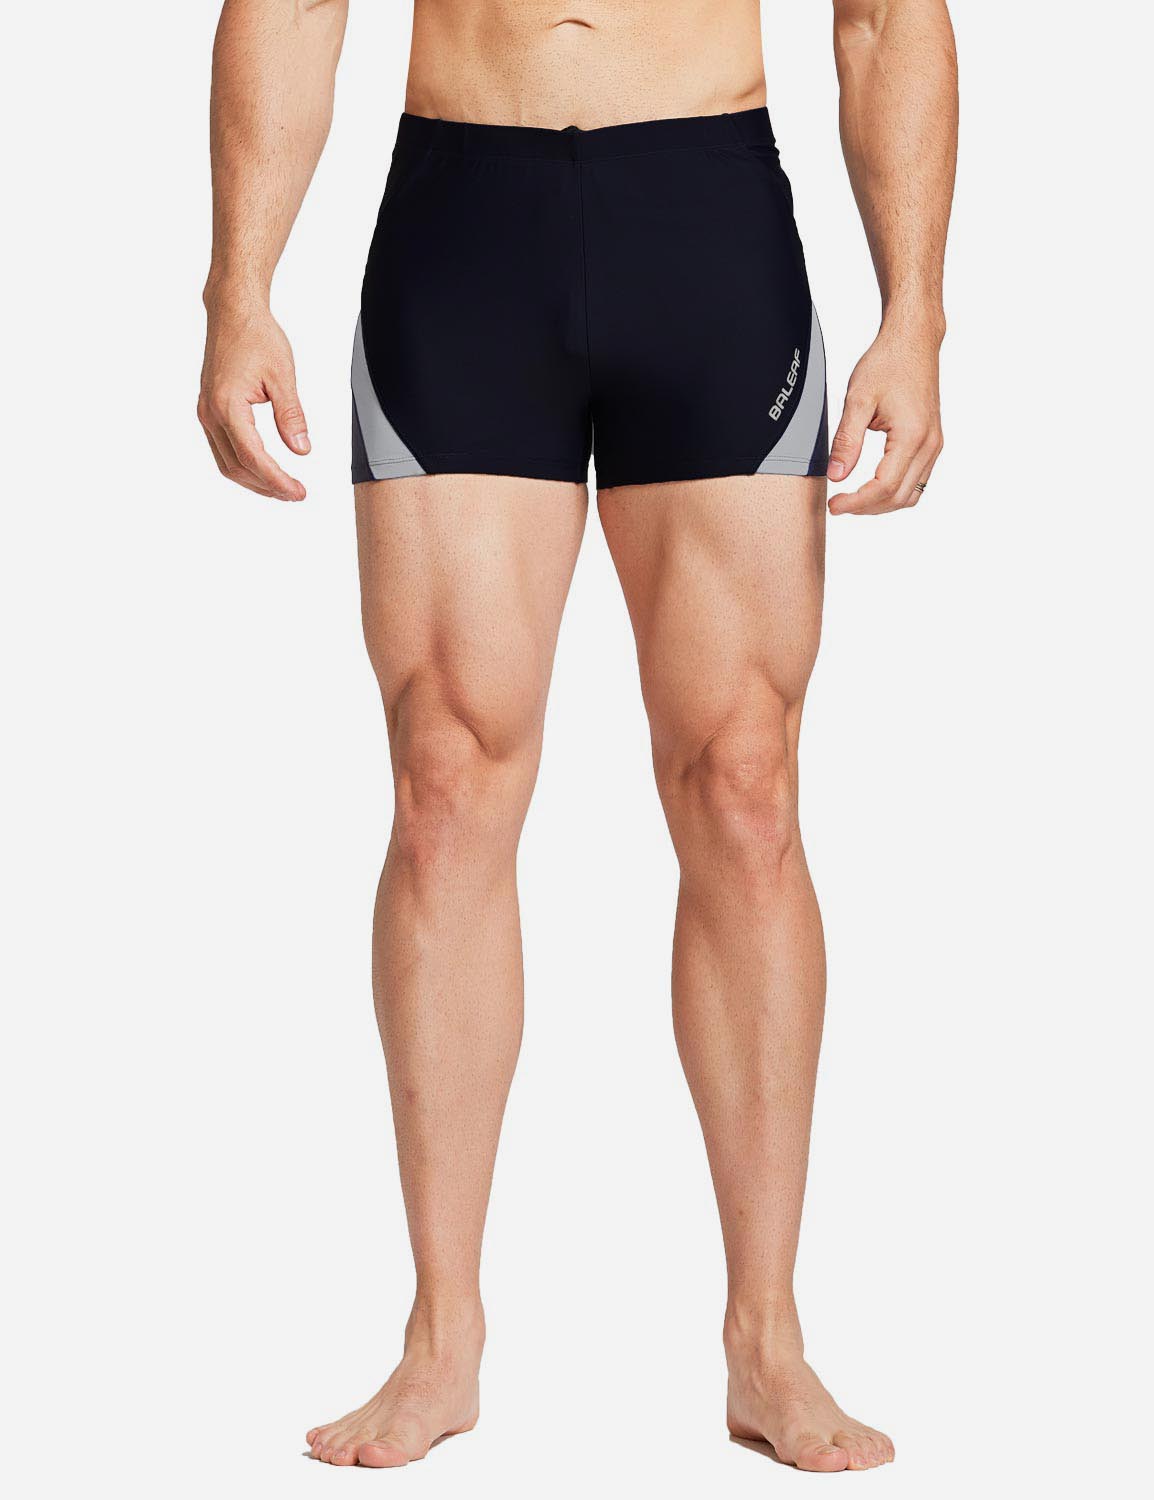 Baleaf Men's UPF 50+ High Cut Elastic Waistband Quick Dry Swim Shorts aca377 Gray/White Front